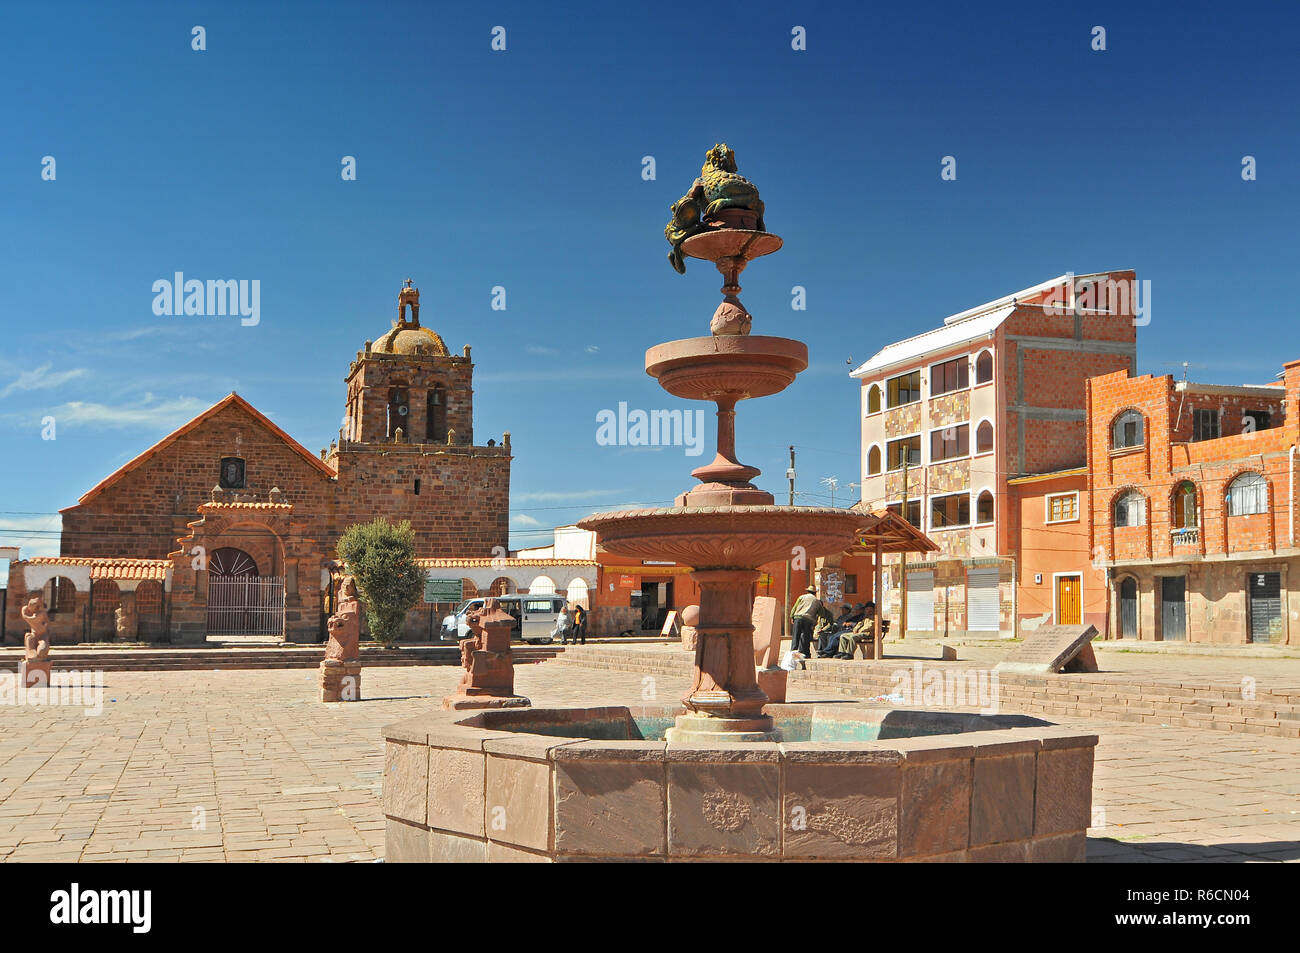 Bolivia, Tiwanaku, Church And Fountain In Main Square Stock Photo